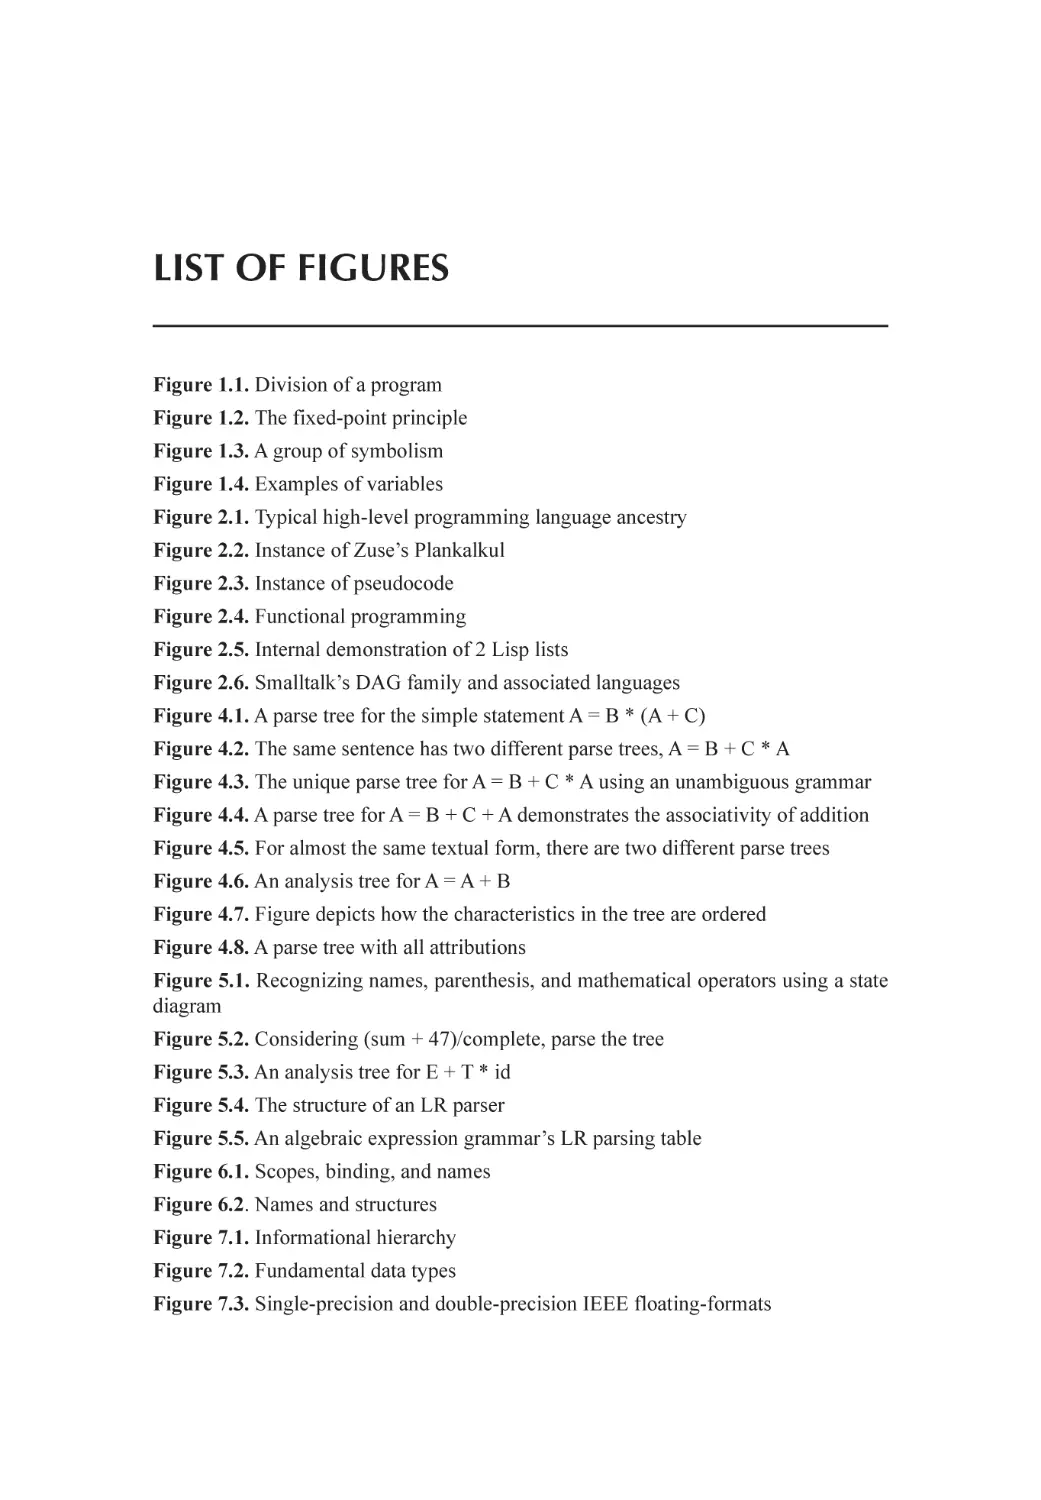 List of Figures